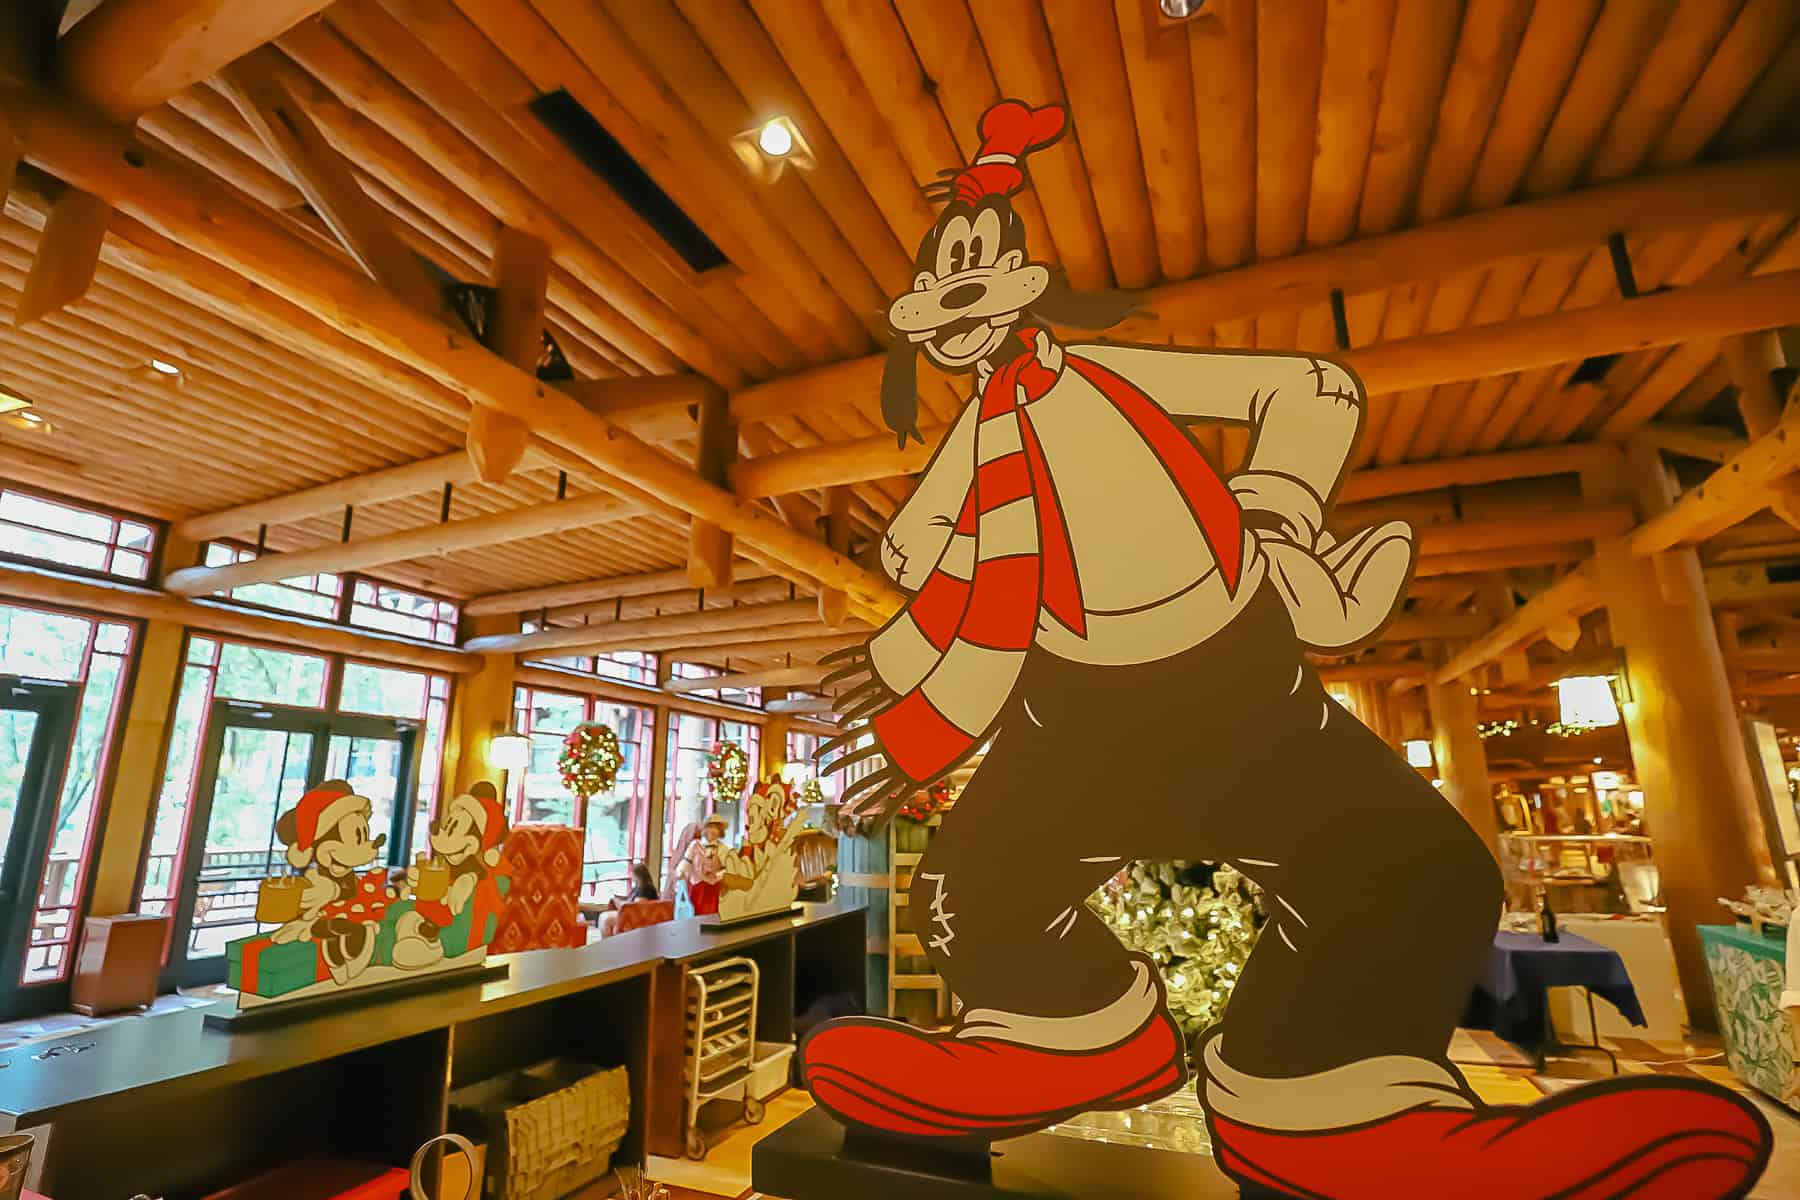 Cardboard cutout of Goofy in Christmas attire at Disney's Wilderness Lodge 